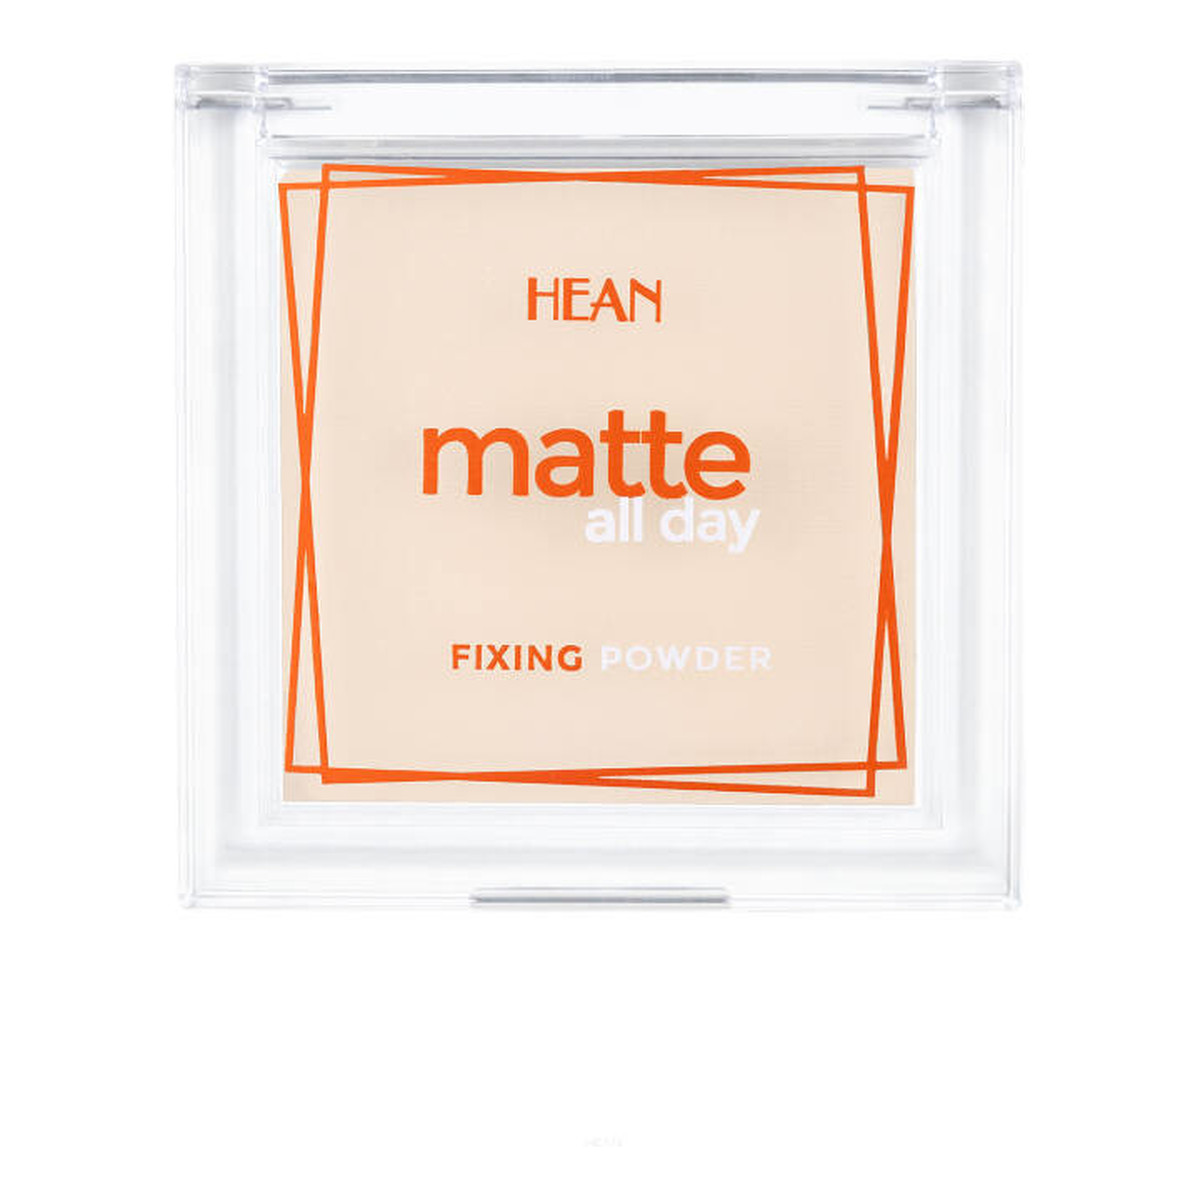 Hean Matte All Day Puder matujący Fixing powder 9g